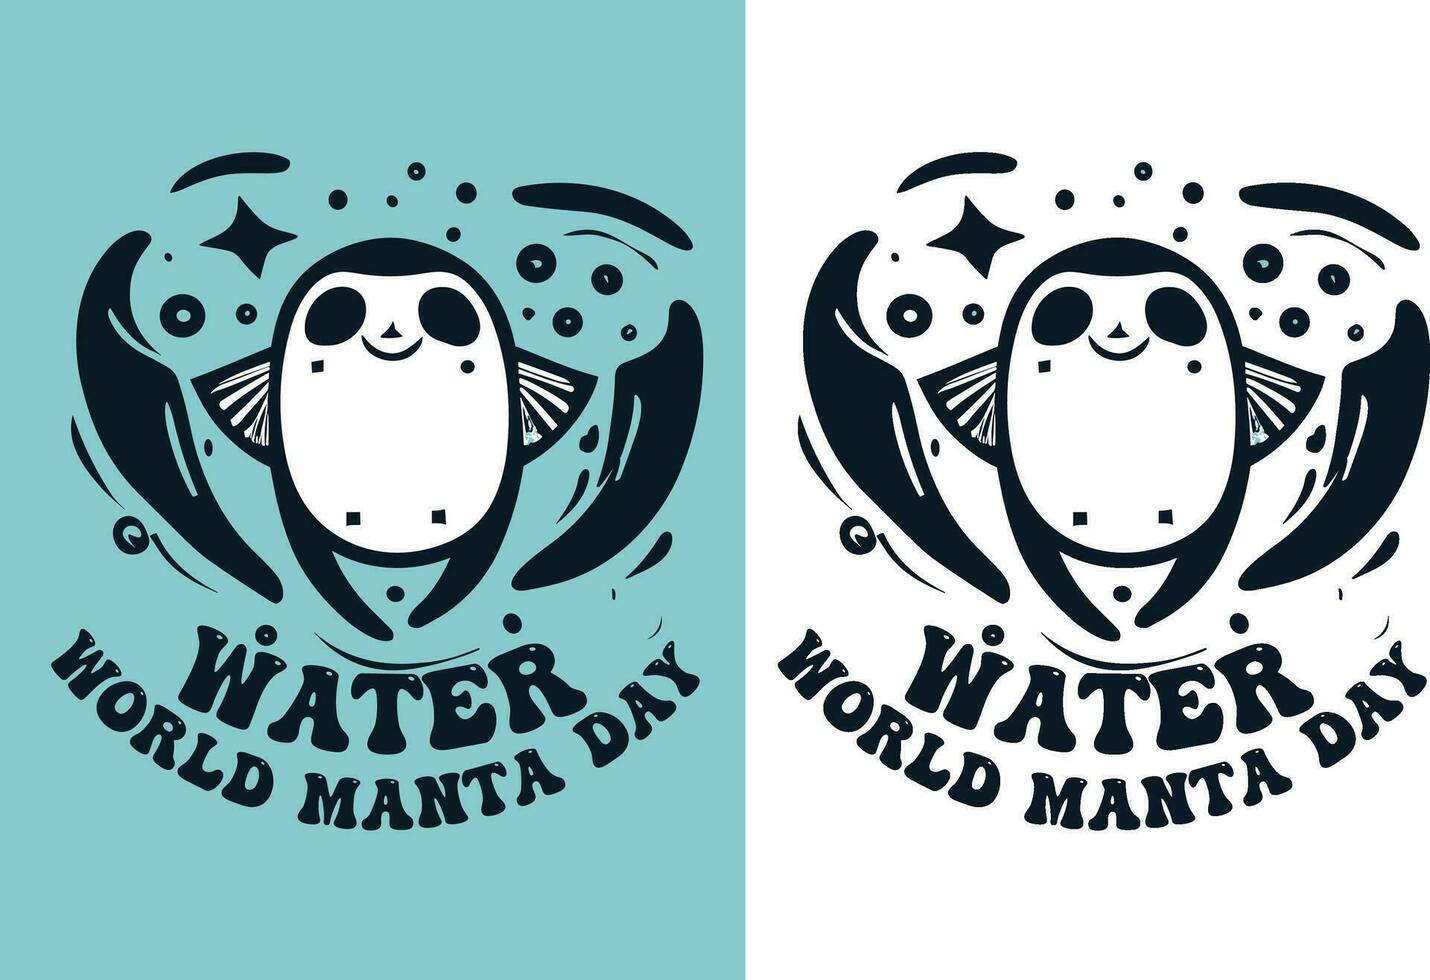 World Manta Day take a astra day T shirt Design vector